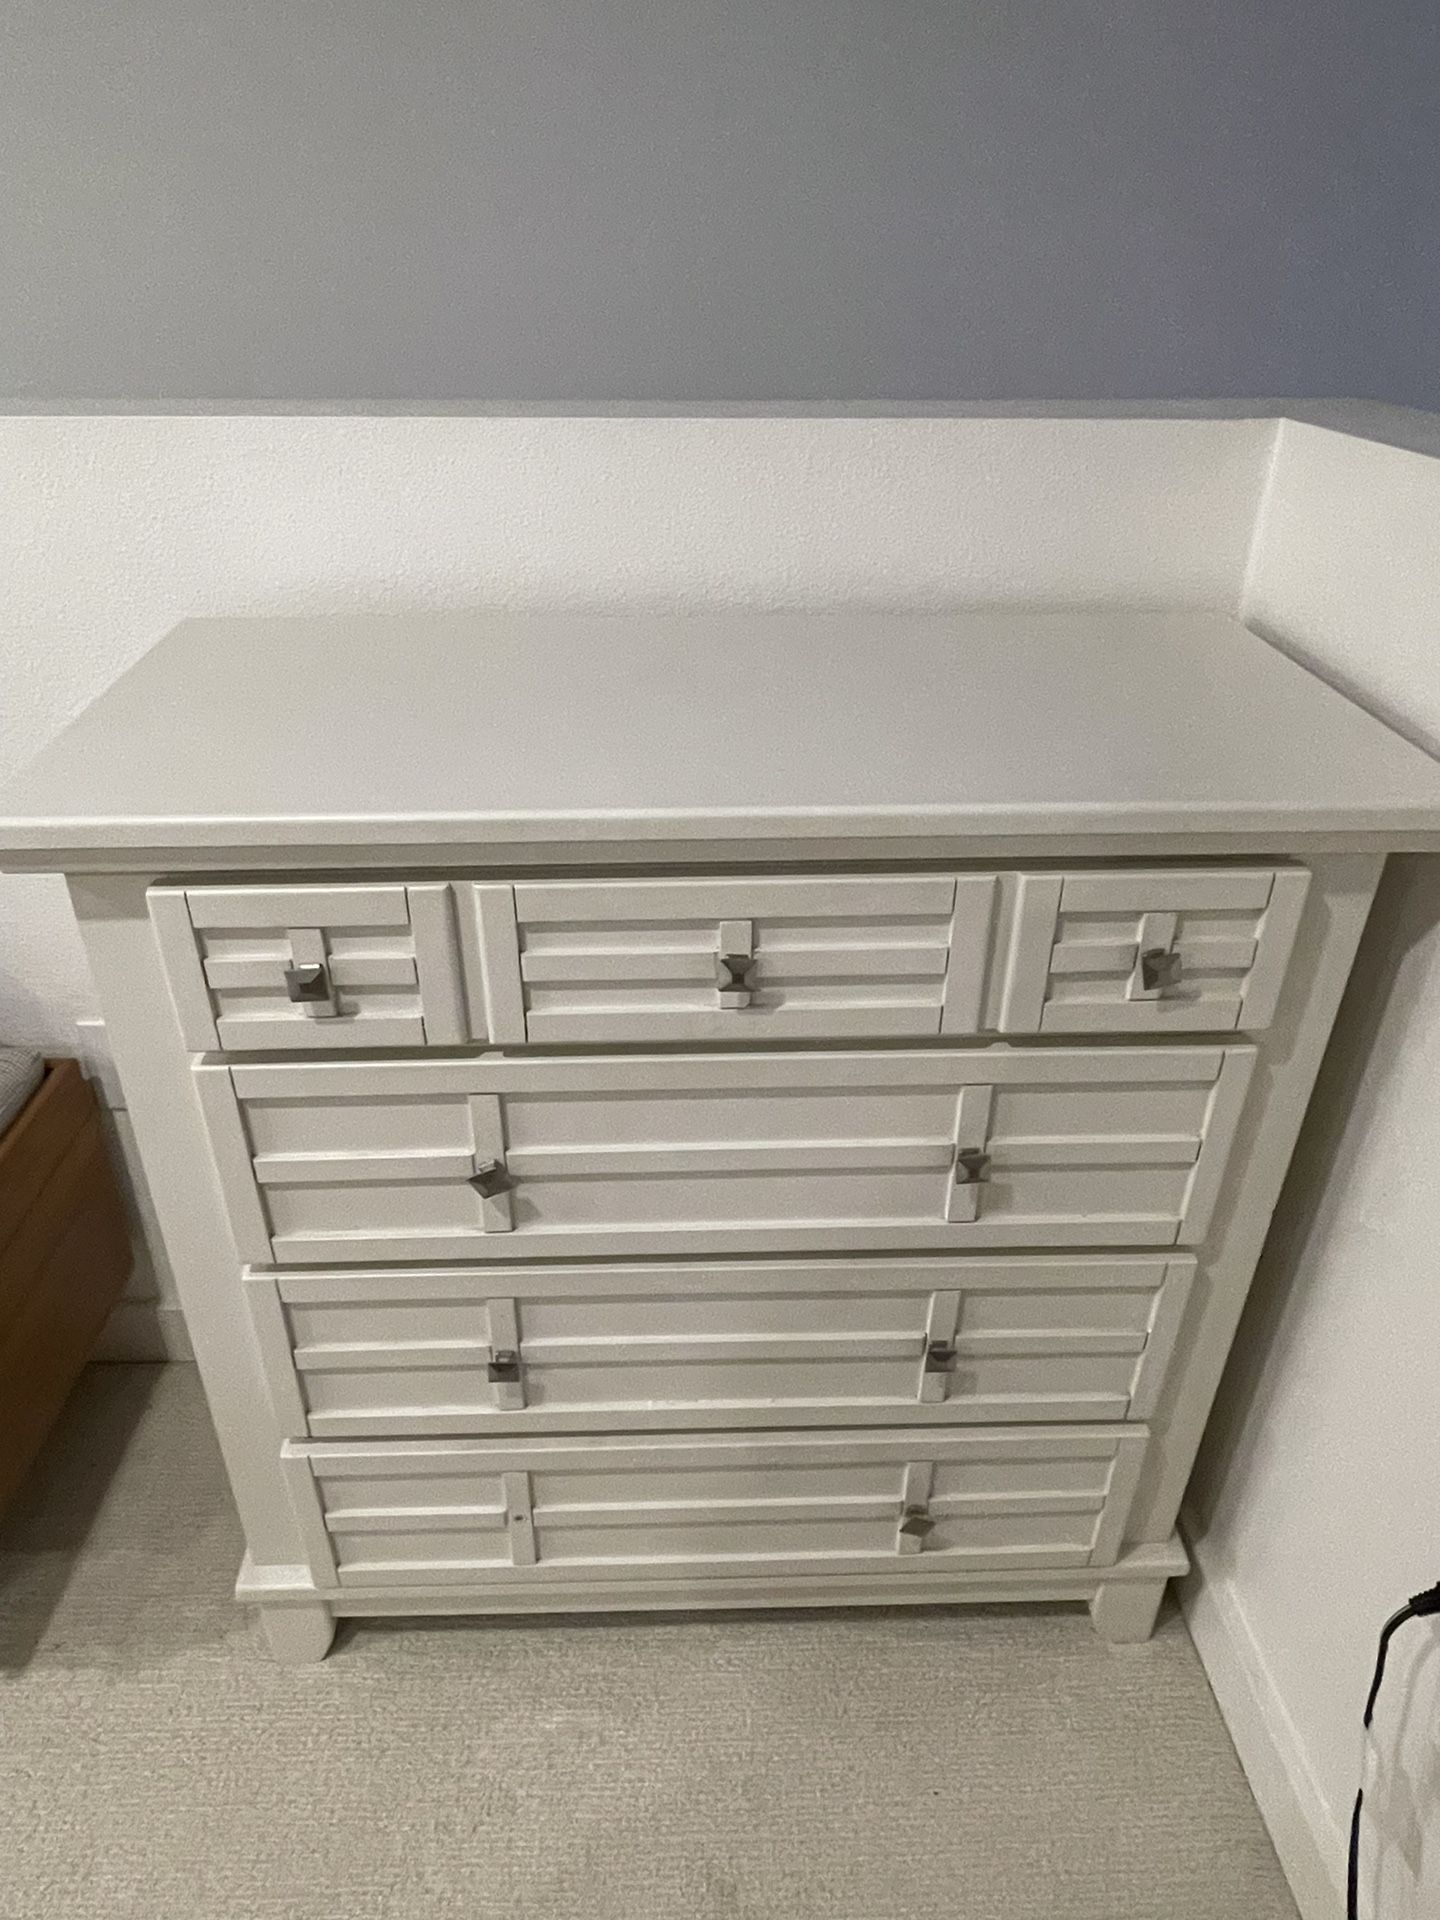 White Dresser Four Drawer Dresser 